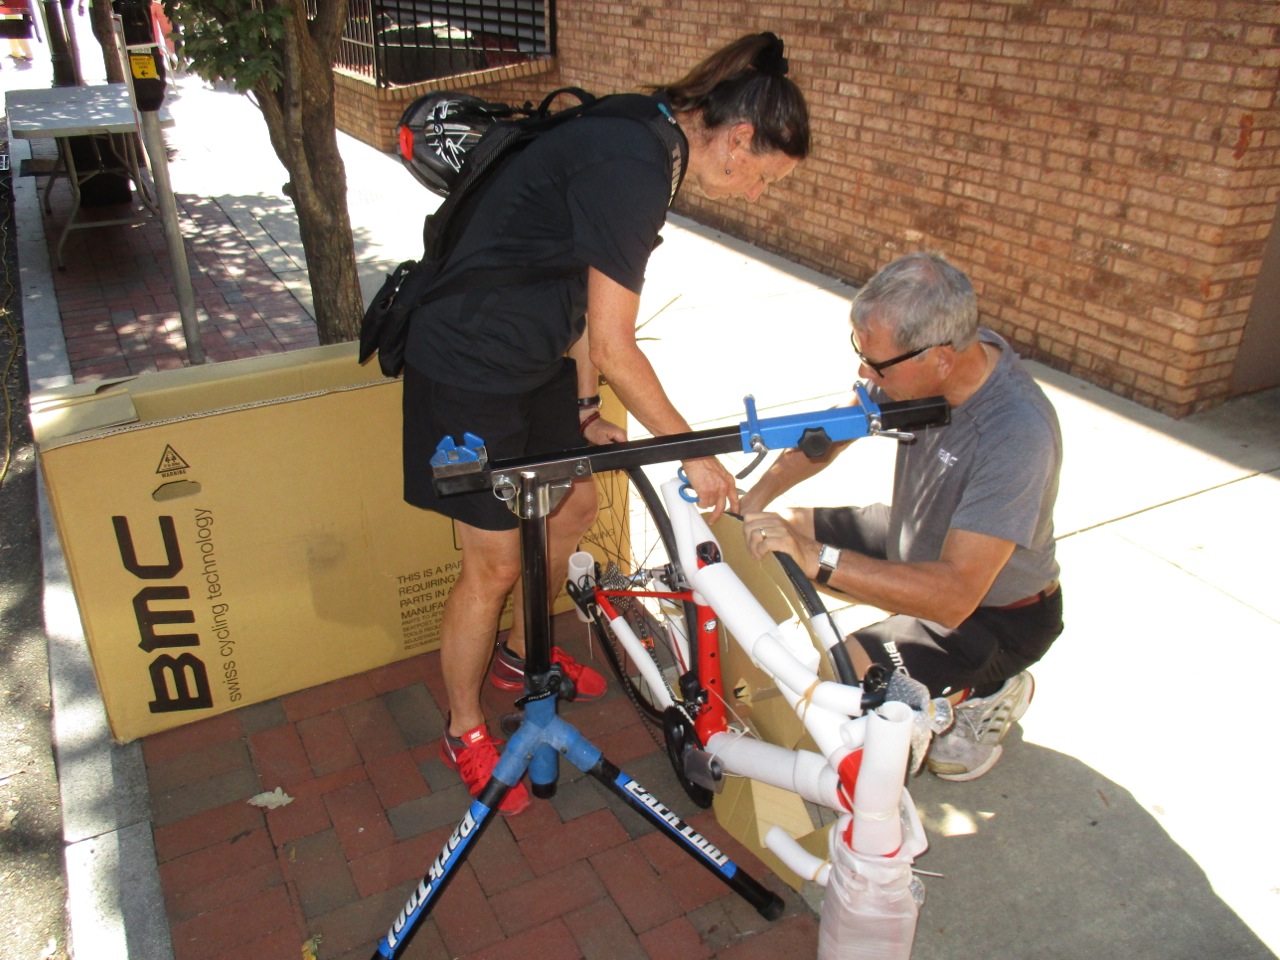 Trudi got a new road bike from BMC. Looks like Andrej Bek is helping her assemble it.